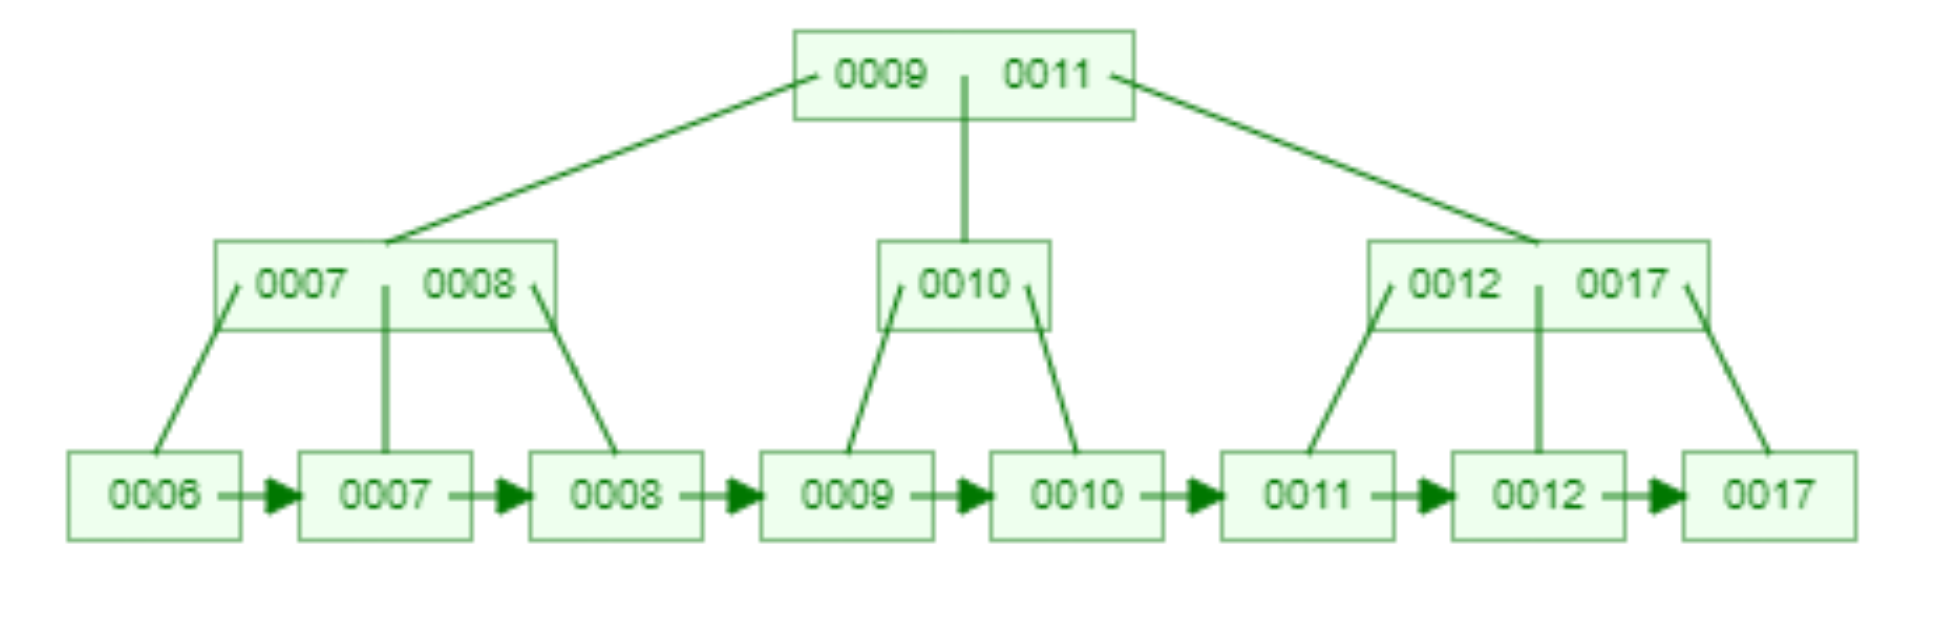 B+ Tree Diagram